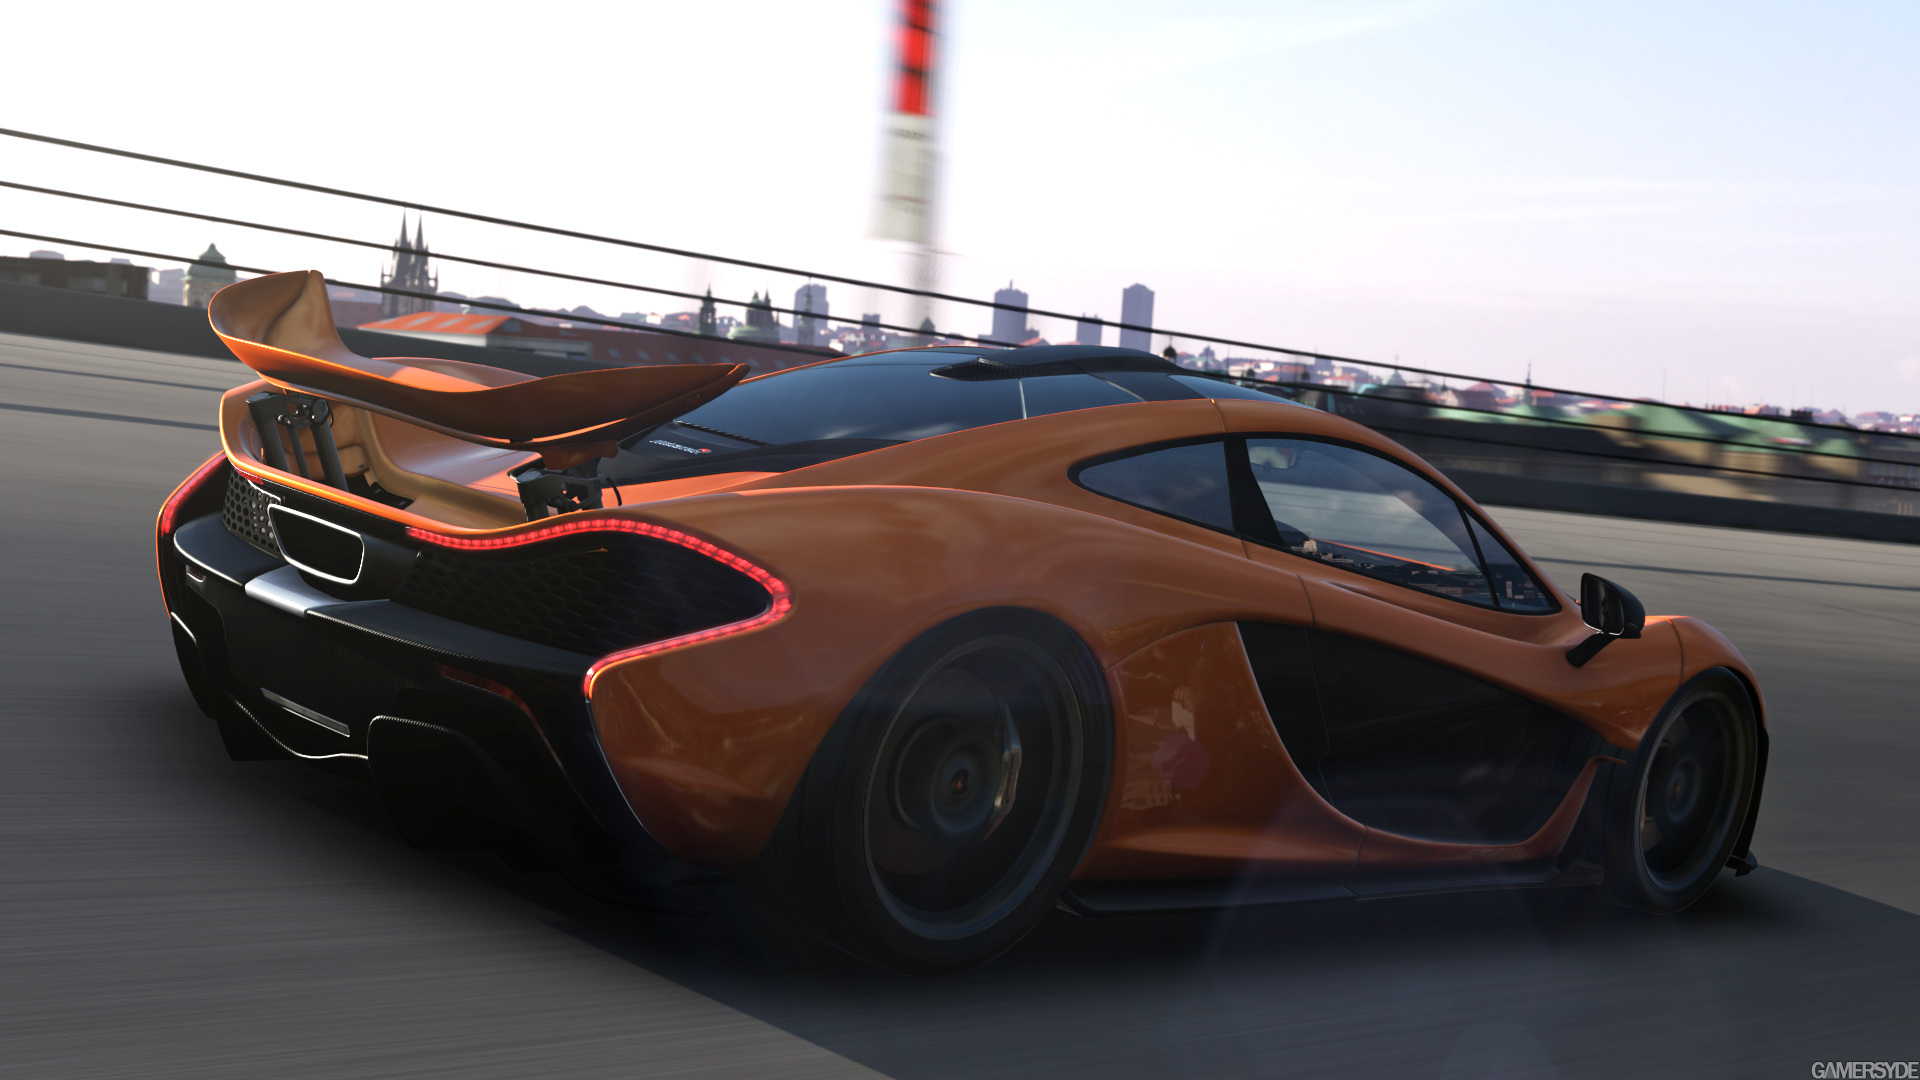 image forza motorsport 5 22122 2721 0004 تصاویر HD از عنوان Forza Motorsport 5 منتشر شد